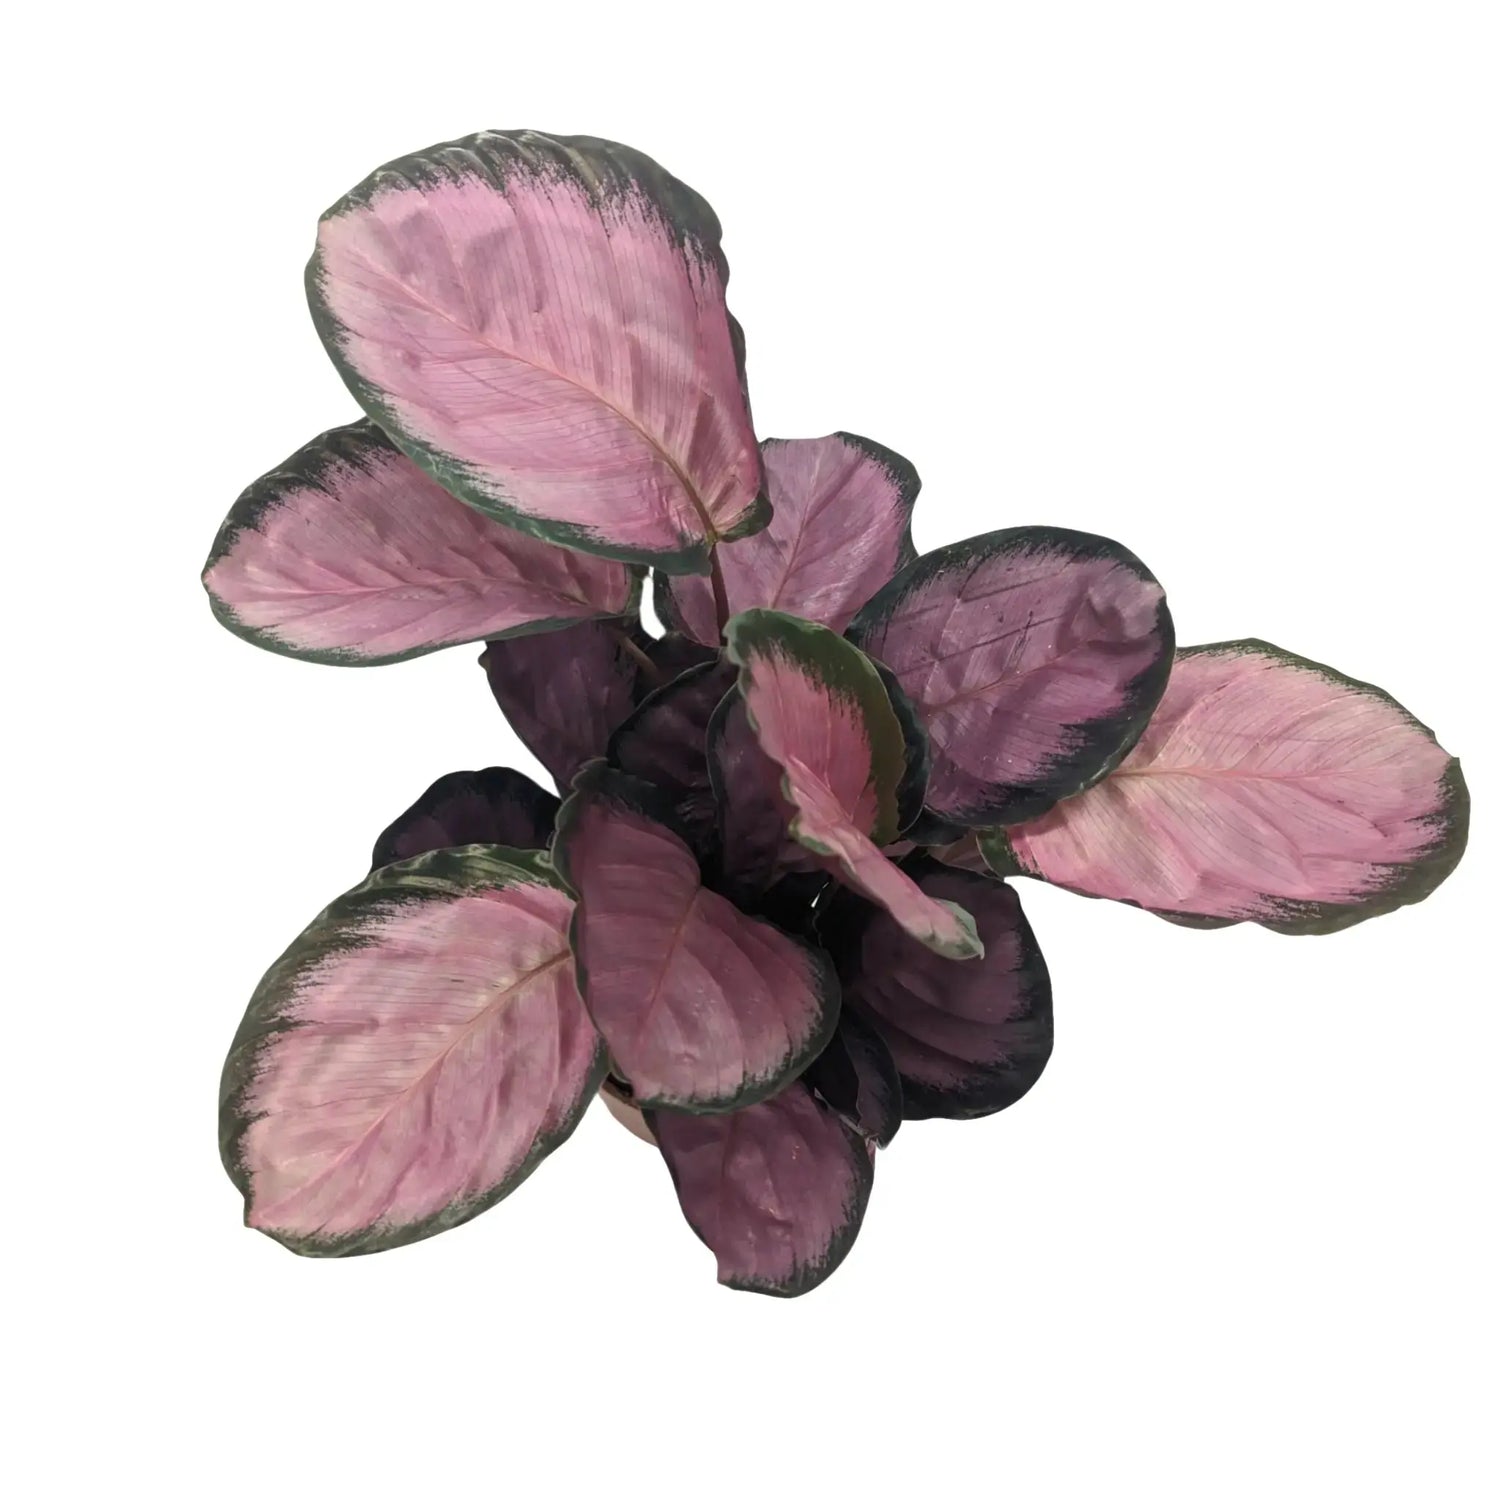 Copy of Calathea Rosey - Peacock Plant Leaf Culture